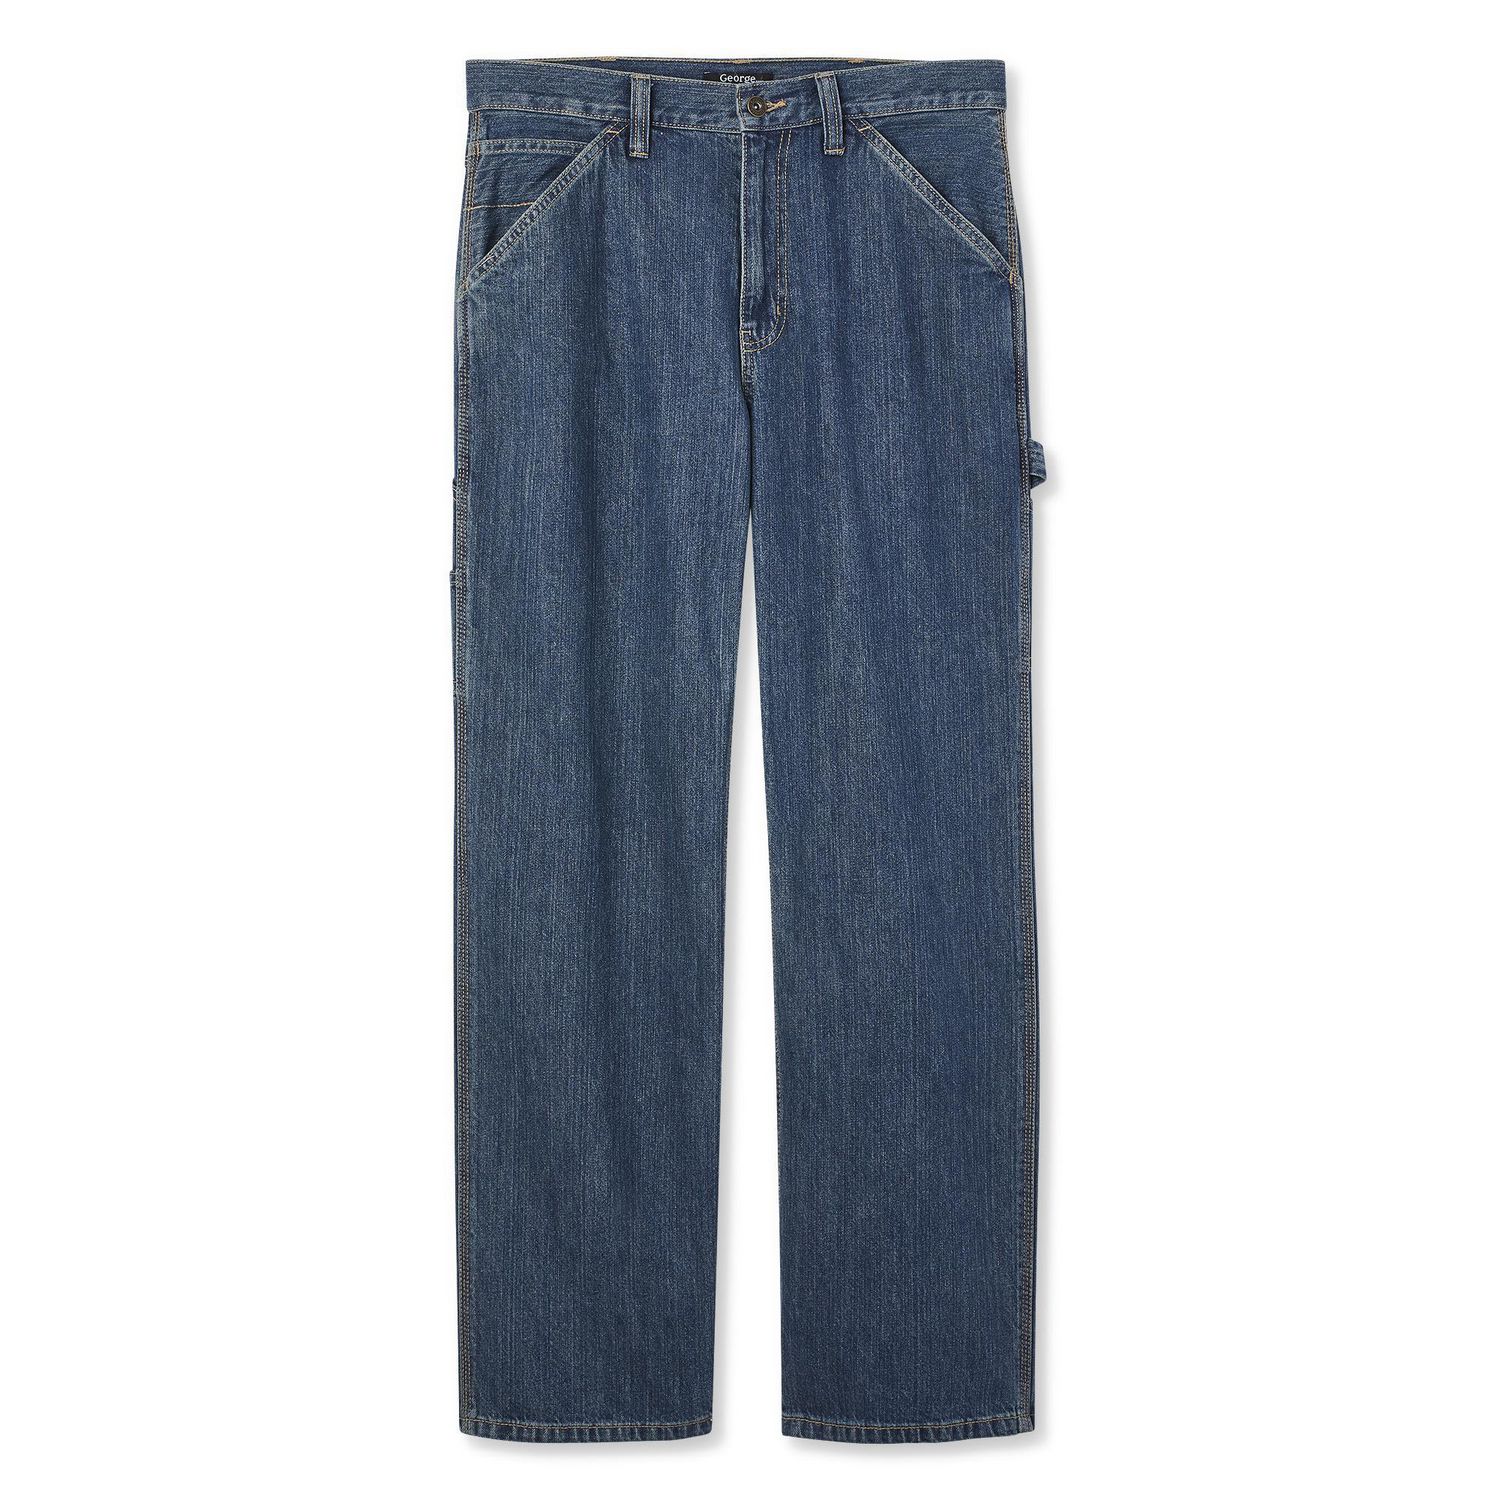 George Men's and Big Men's Carpenter Jeans